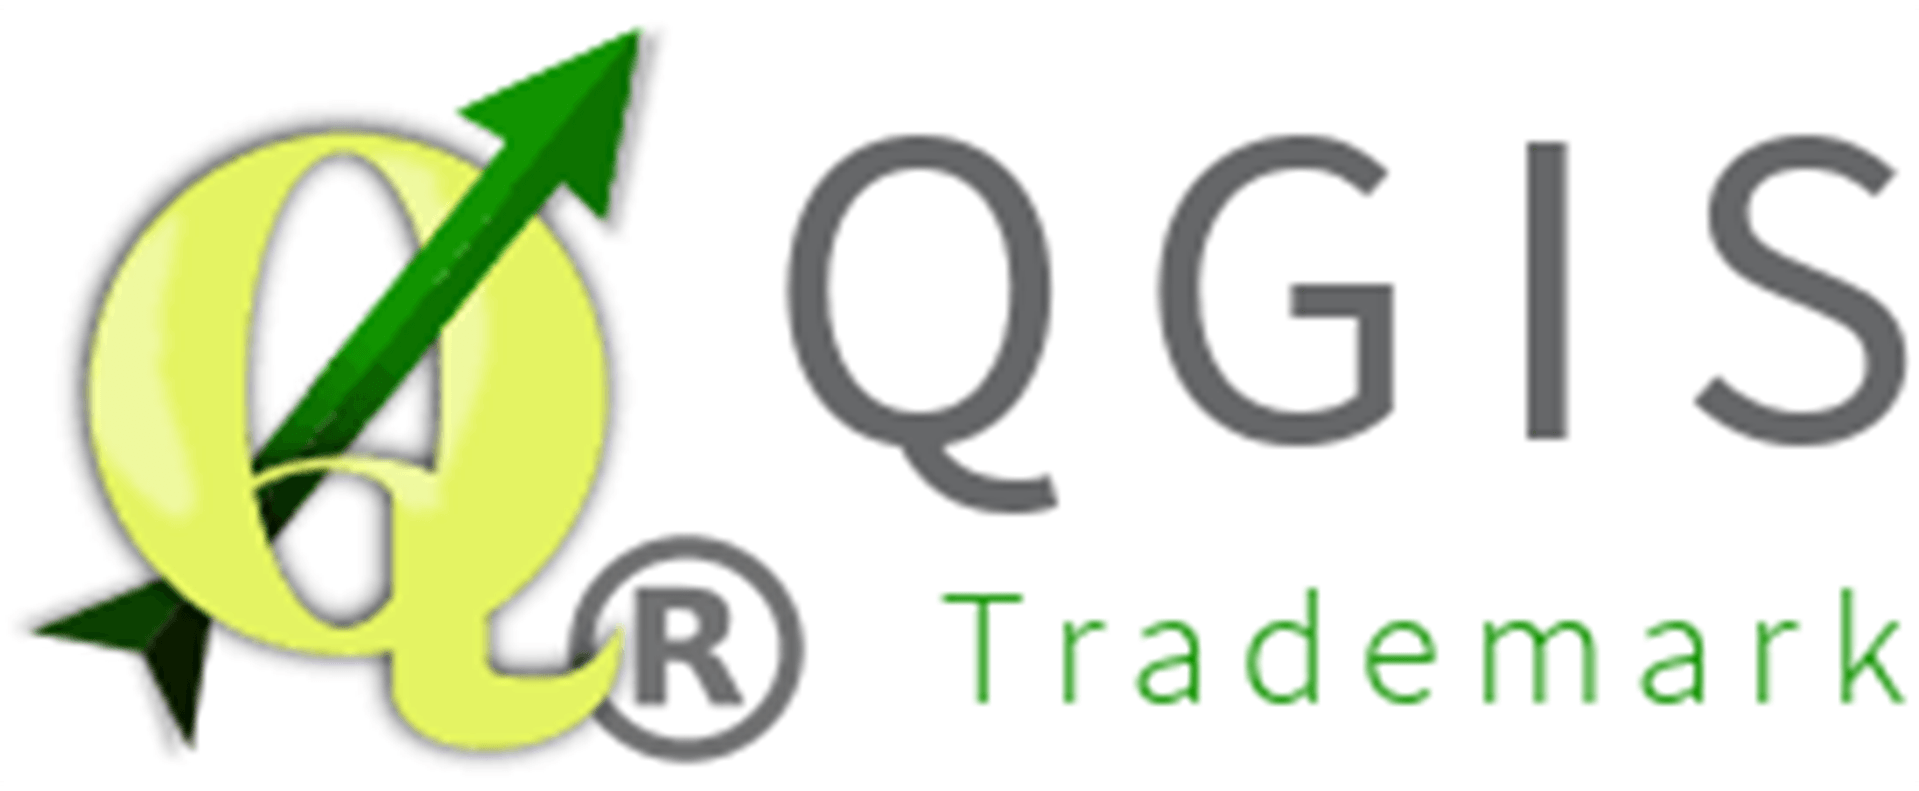 QGIS Logo - Updating Column Name and Column Value in QGIS